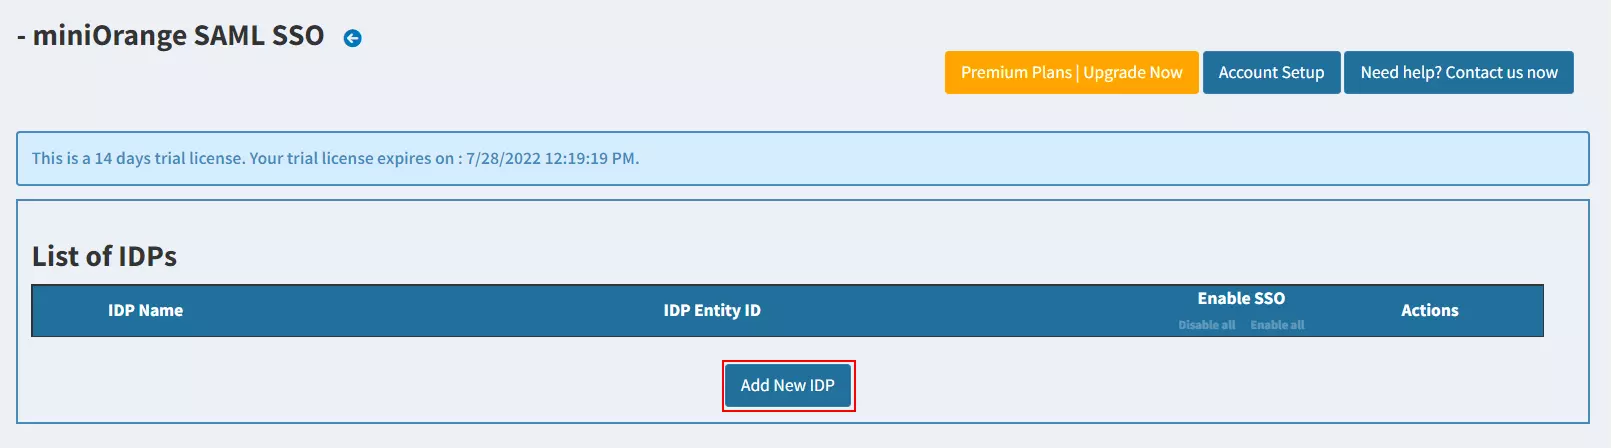 nopCommerce Single Sign-On (SSO) using WordPress as IDP - Add new IDP